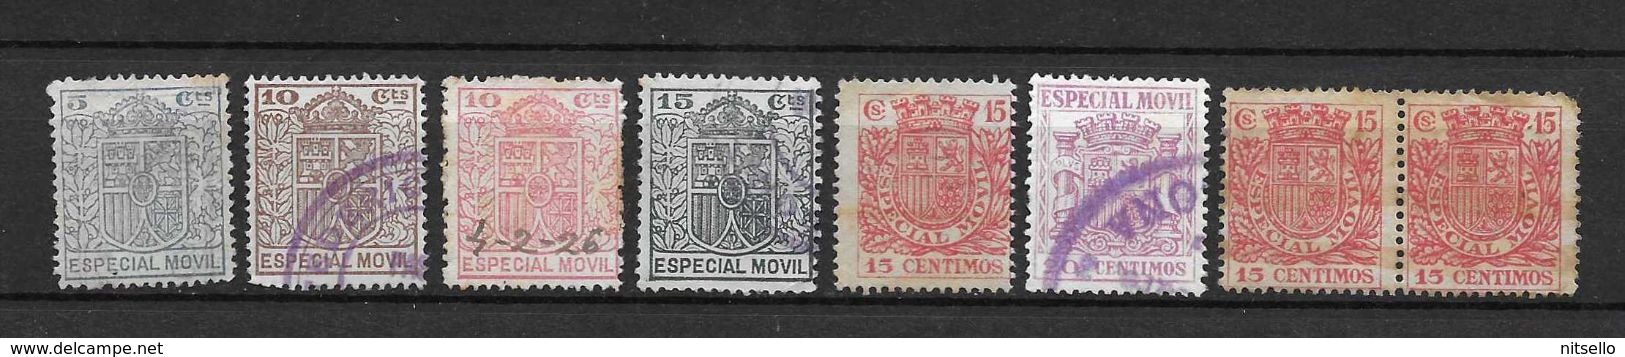 LOTE 1891 D  ///  ESPAÑA  SELLOS FISCALES  - - Revenue Stamps